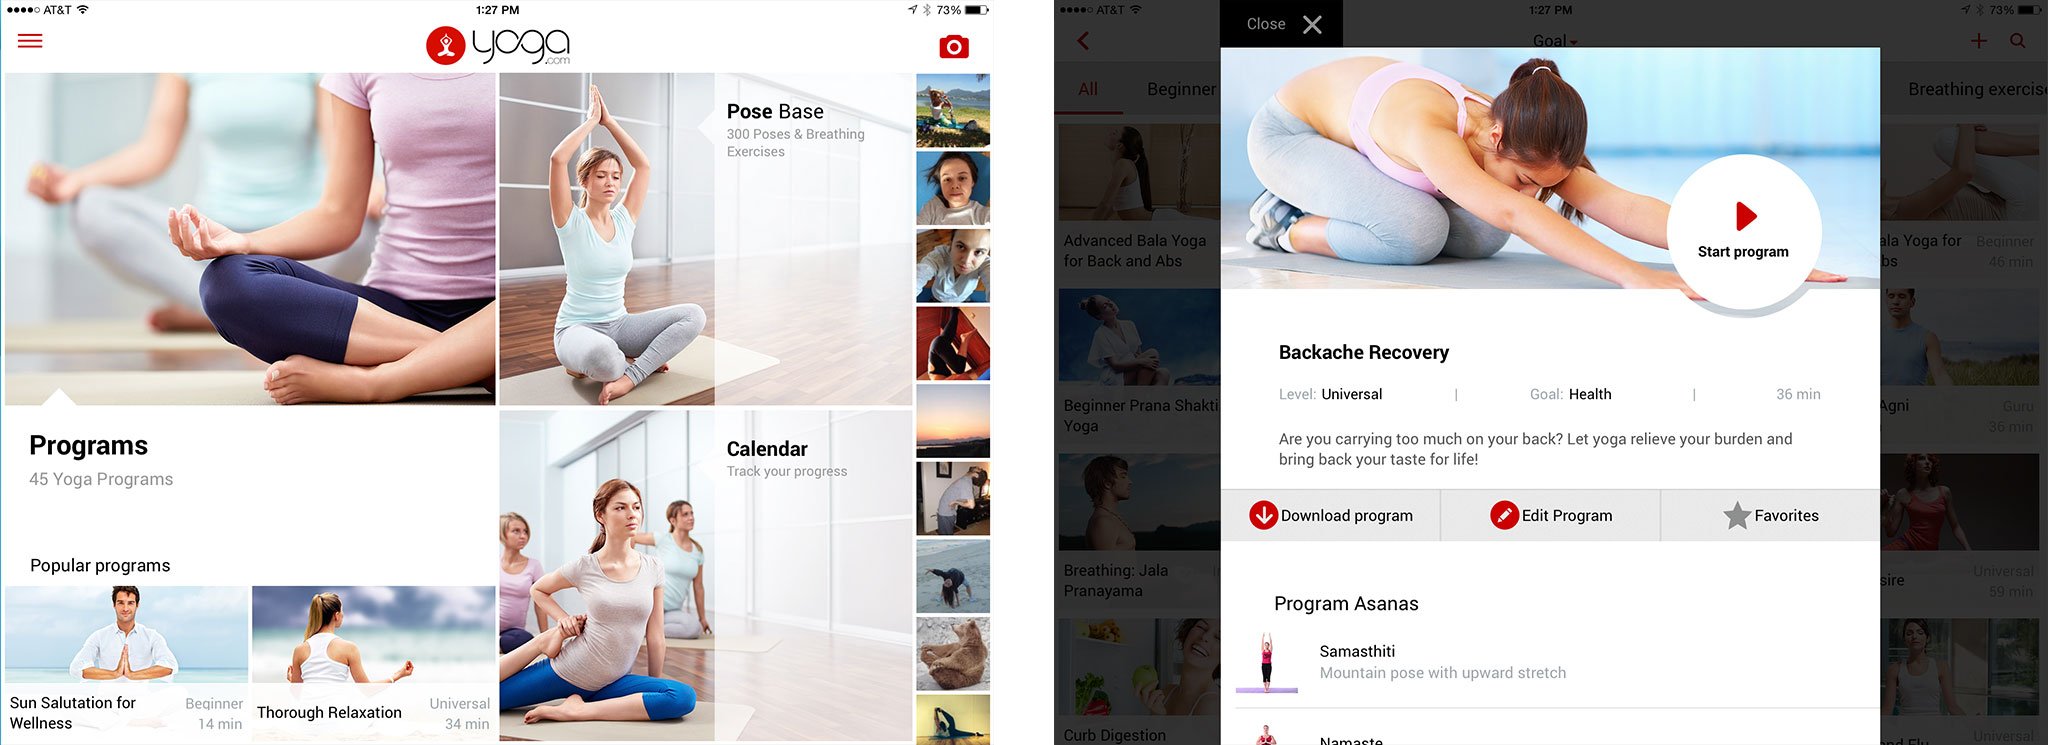 Best yoga apps for iPad: Yoga Studio.com